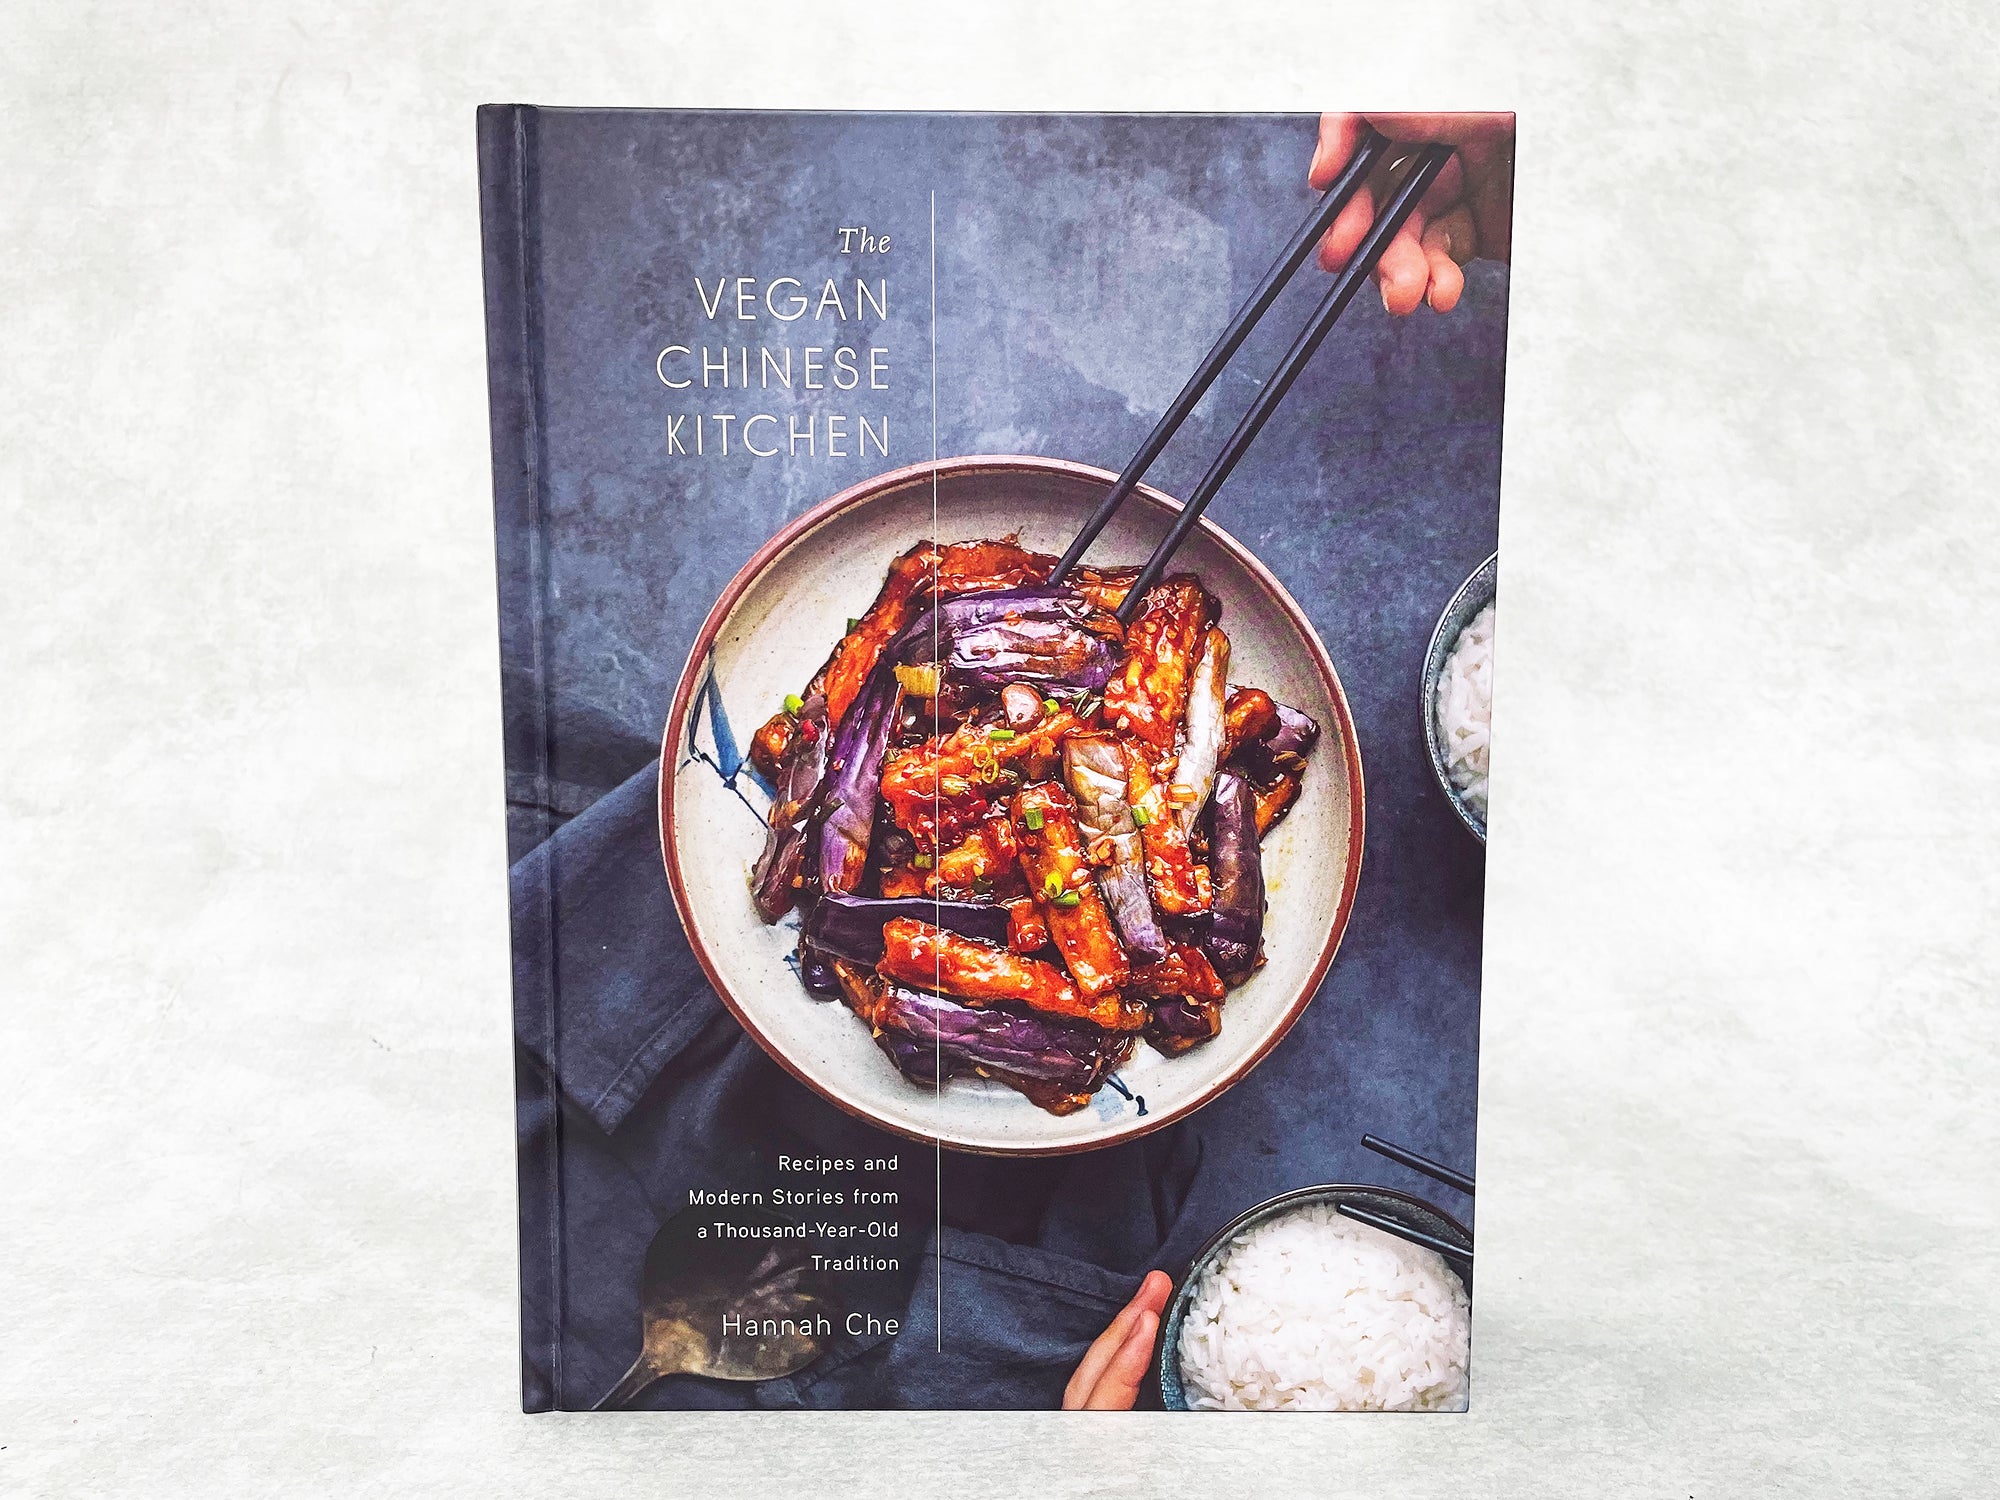 The Vegan Chinese Kitchen cookbook